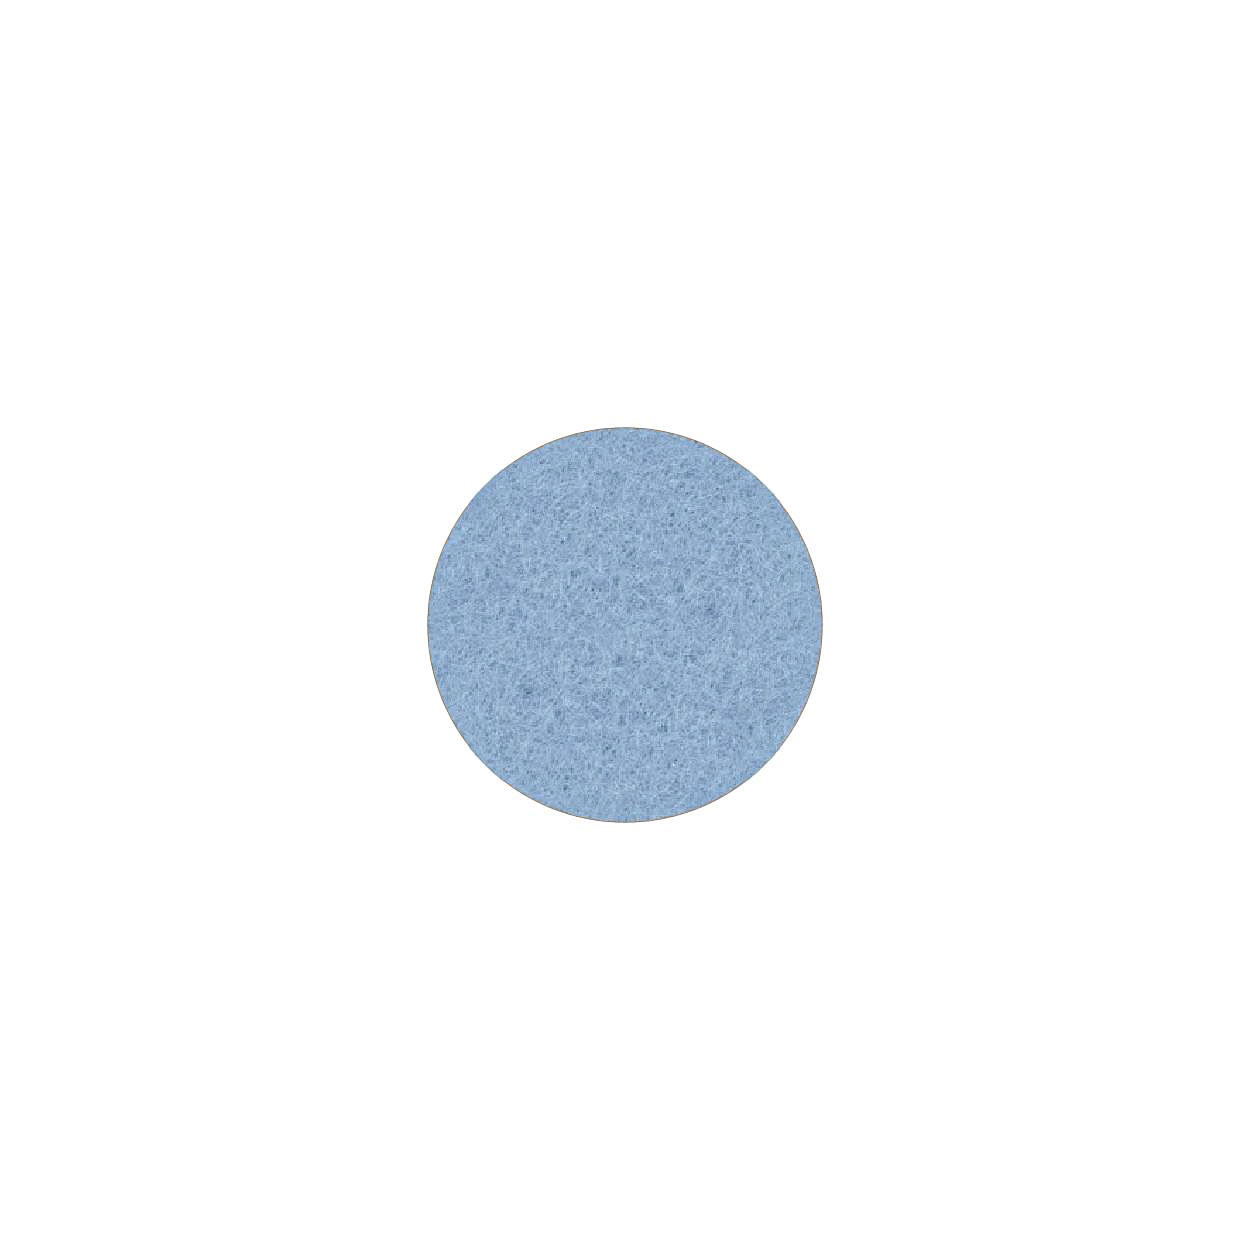 Onderzetter 9cm pastel blue 19